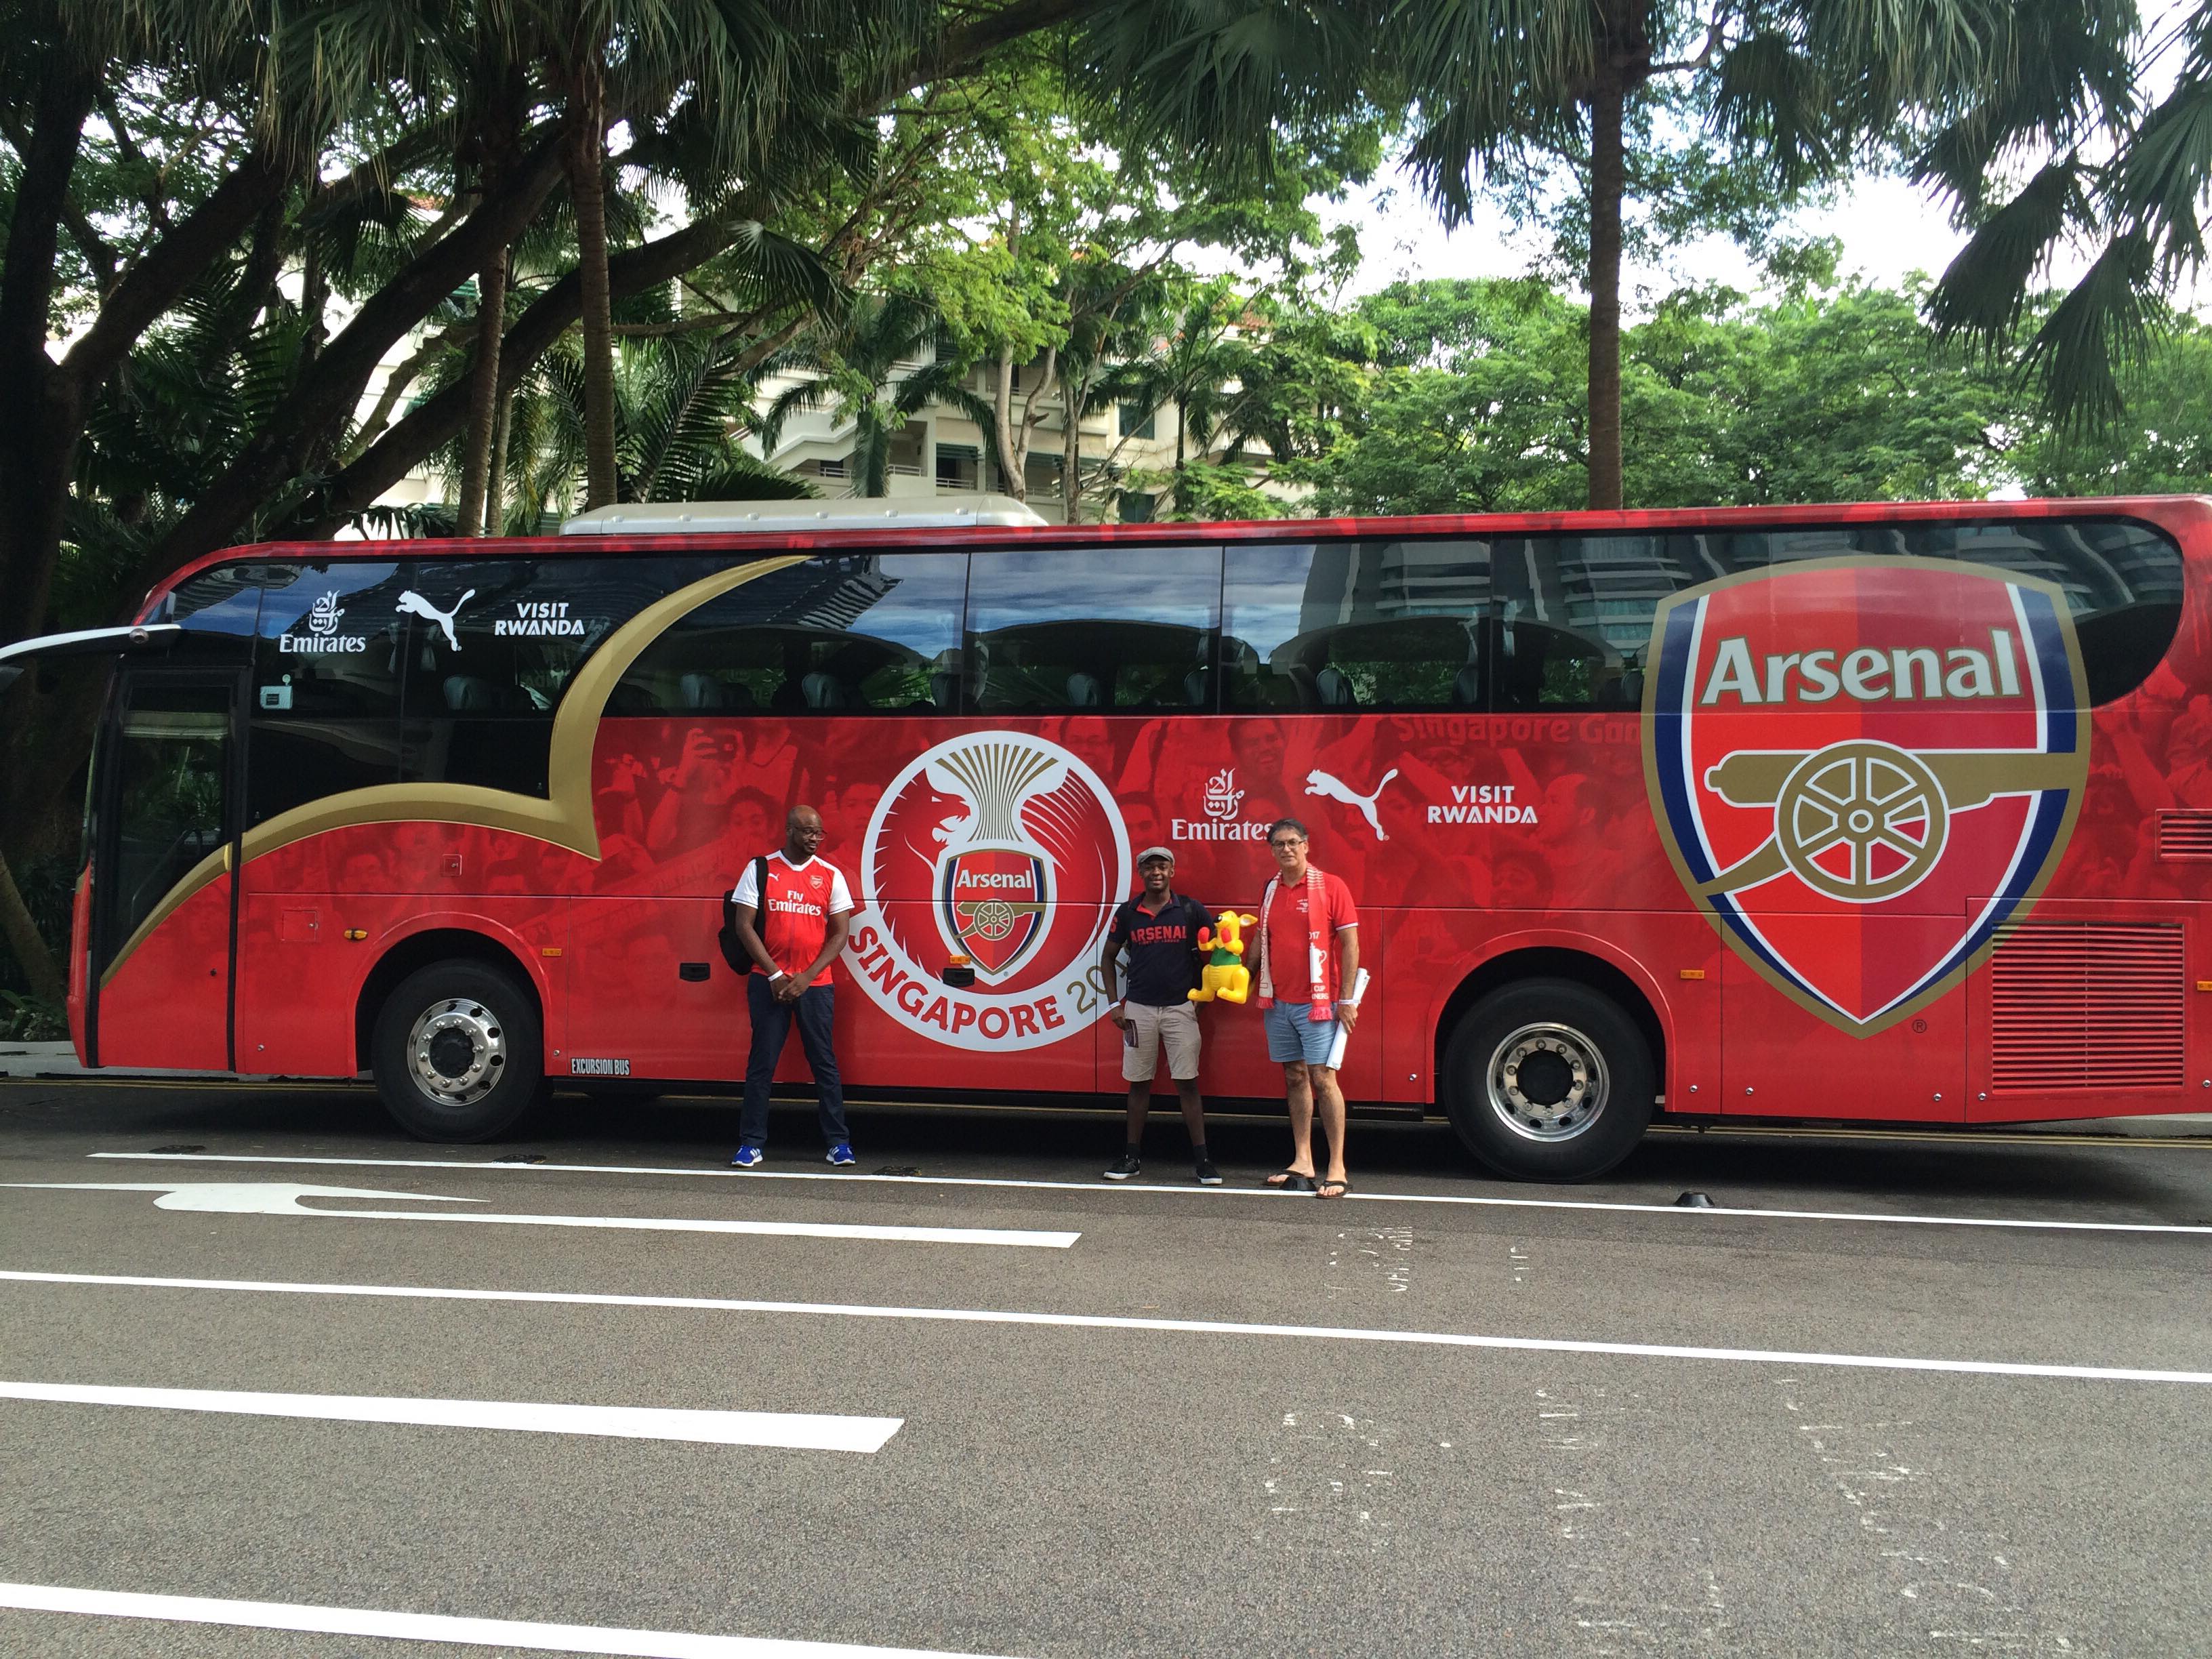 Arsenal Fc Bus - Valencia Cf Bus His Fans Street Outside Editorial ...